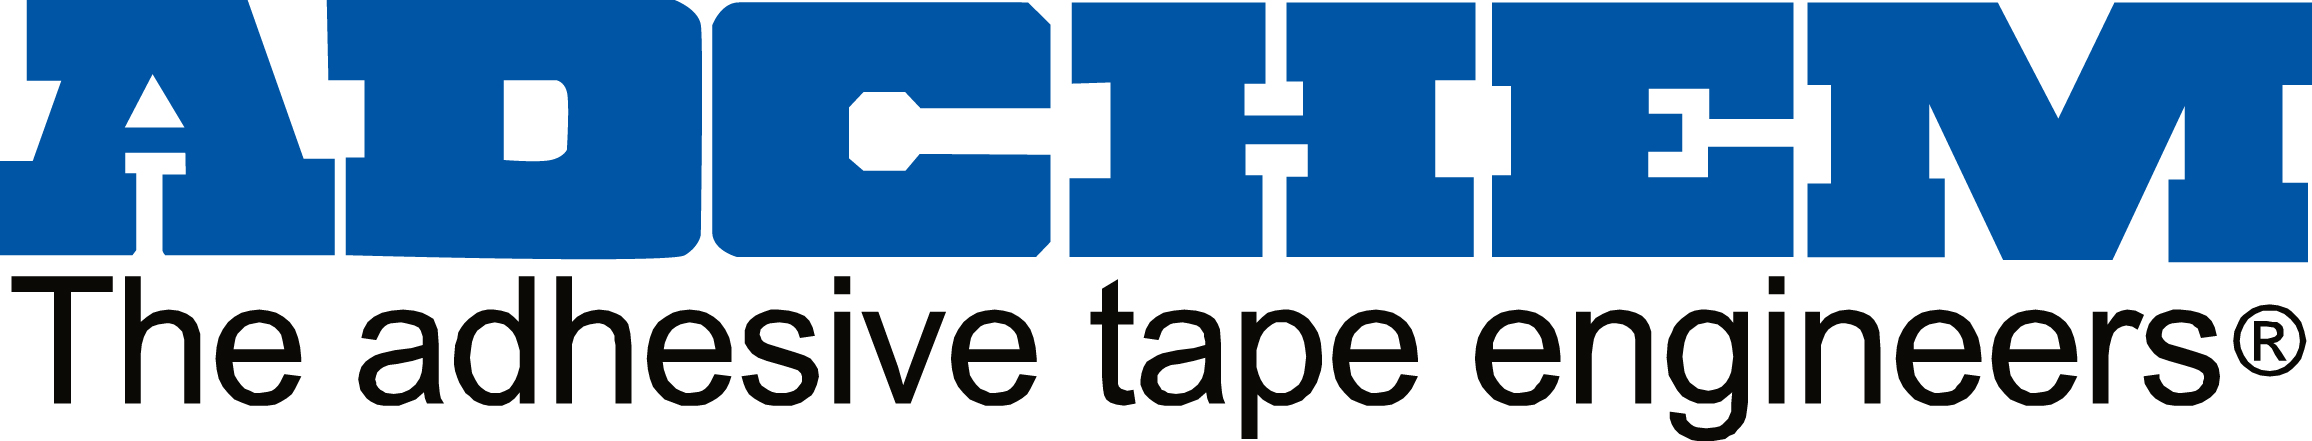 Adchem The Adhesive Tape Engineers Trademark